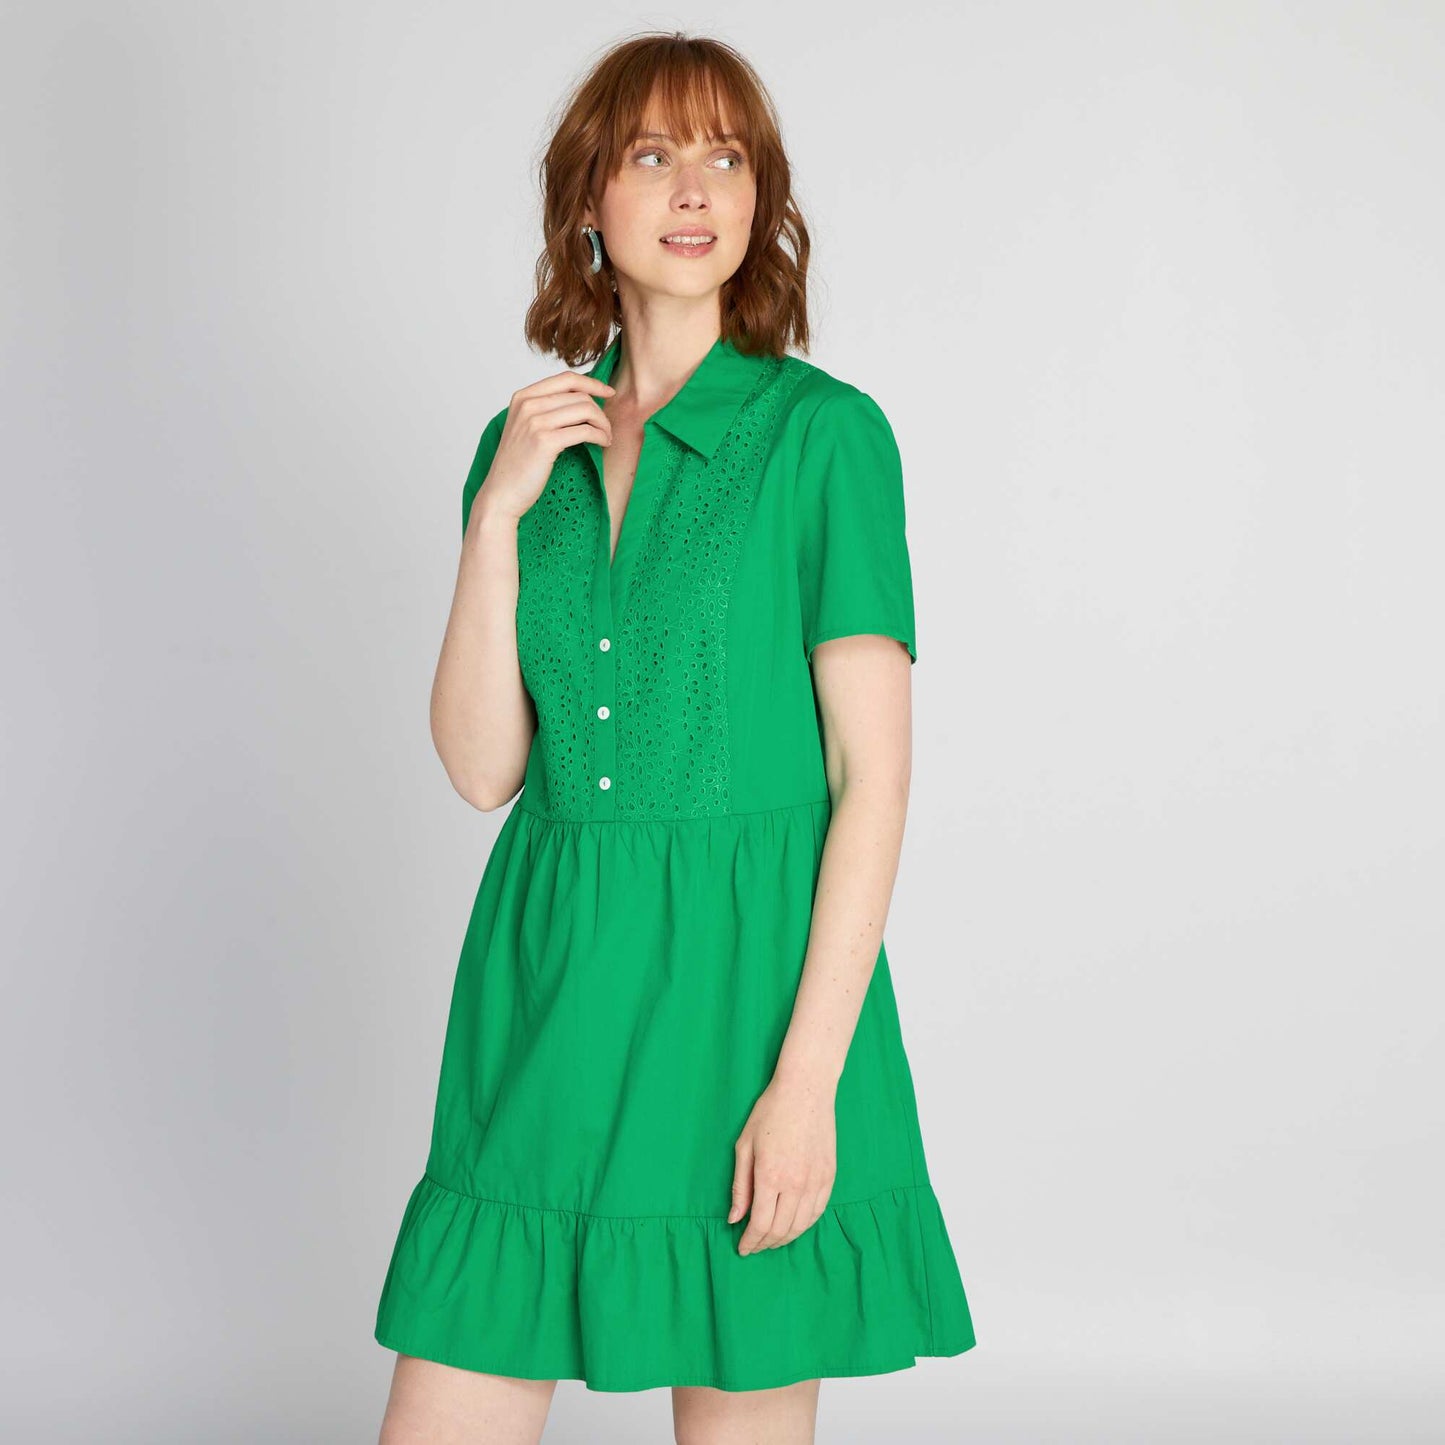 Poplin dress with embroidery garden green